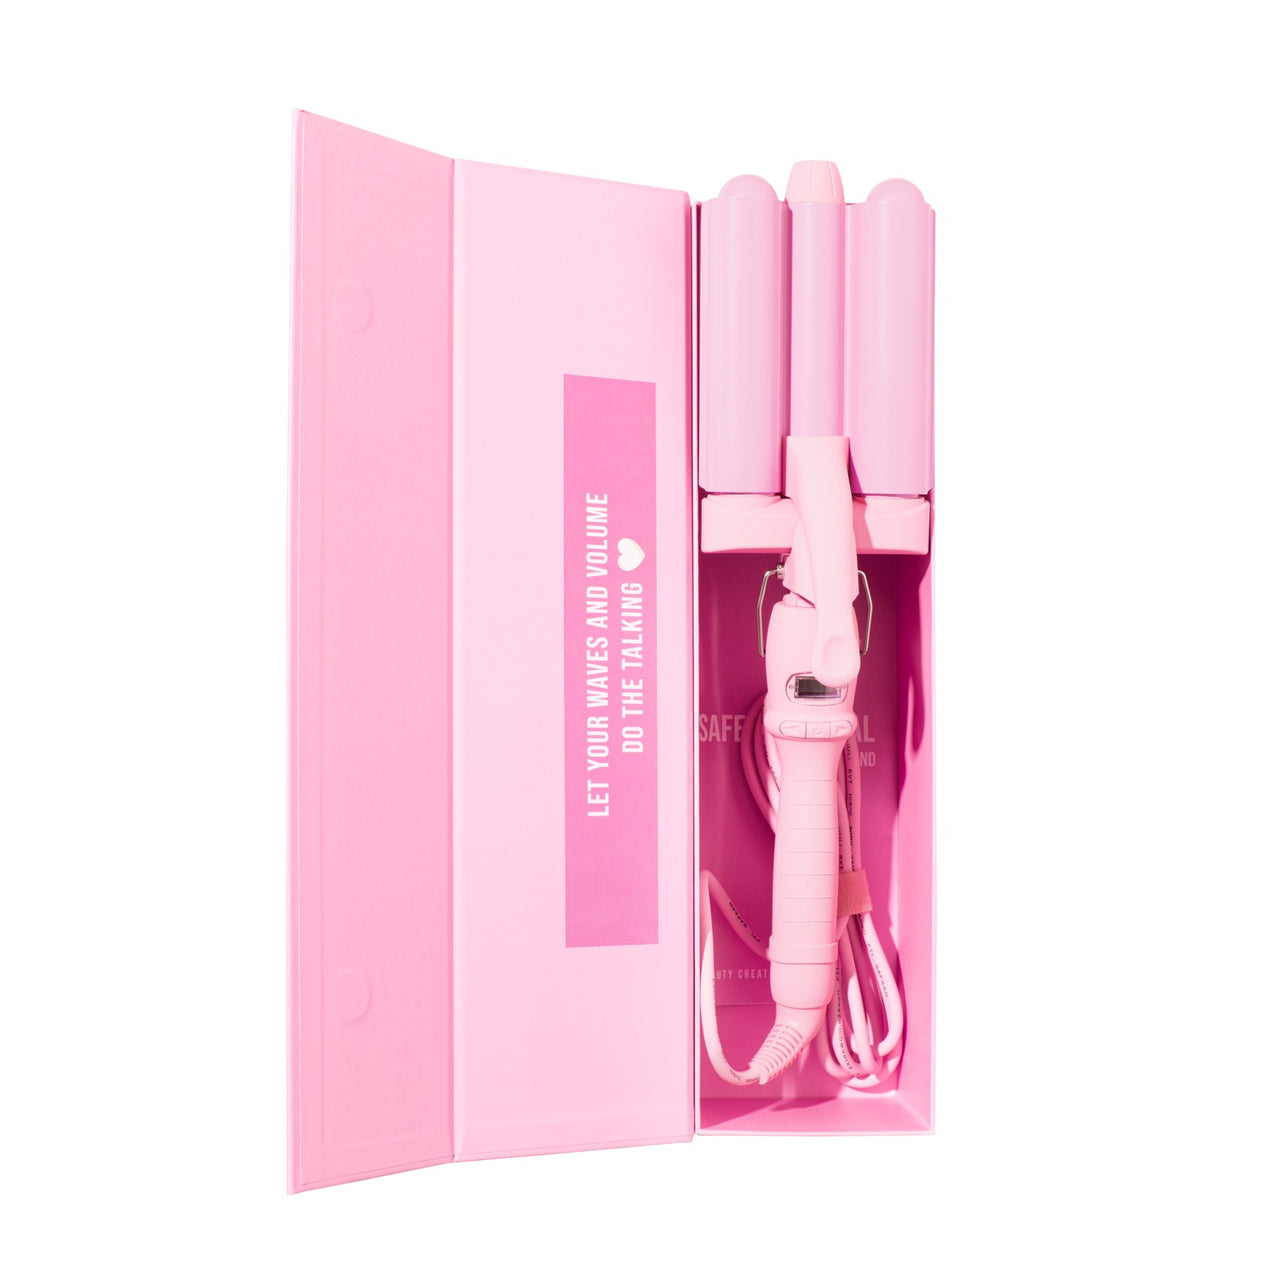 BC-HWW Hair Waver Wand 'Solid Pink' : 1 PC